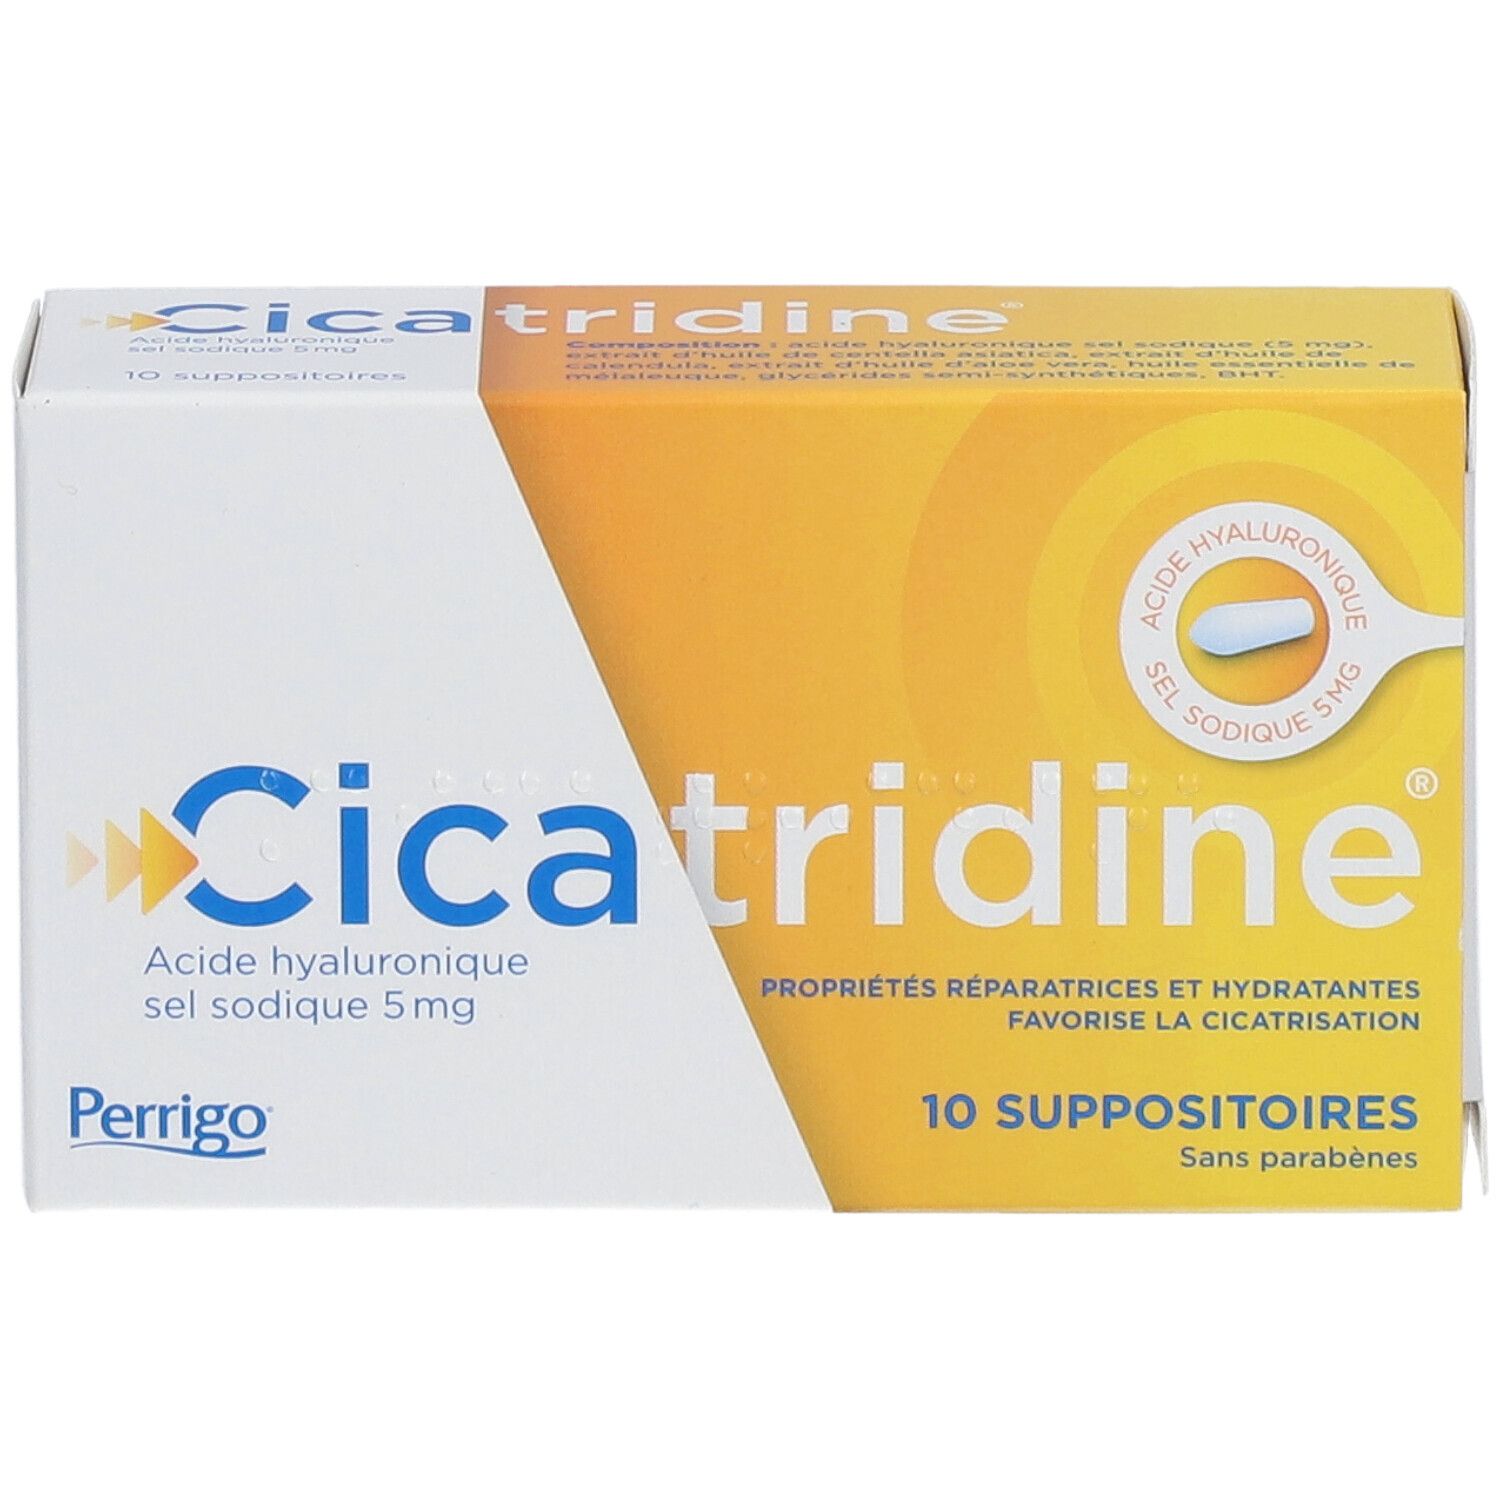 CICATRIDINE Suppositoires acide hyaluroniques x10 - Pharmacie